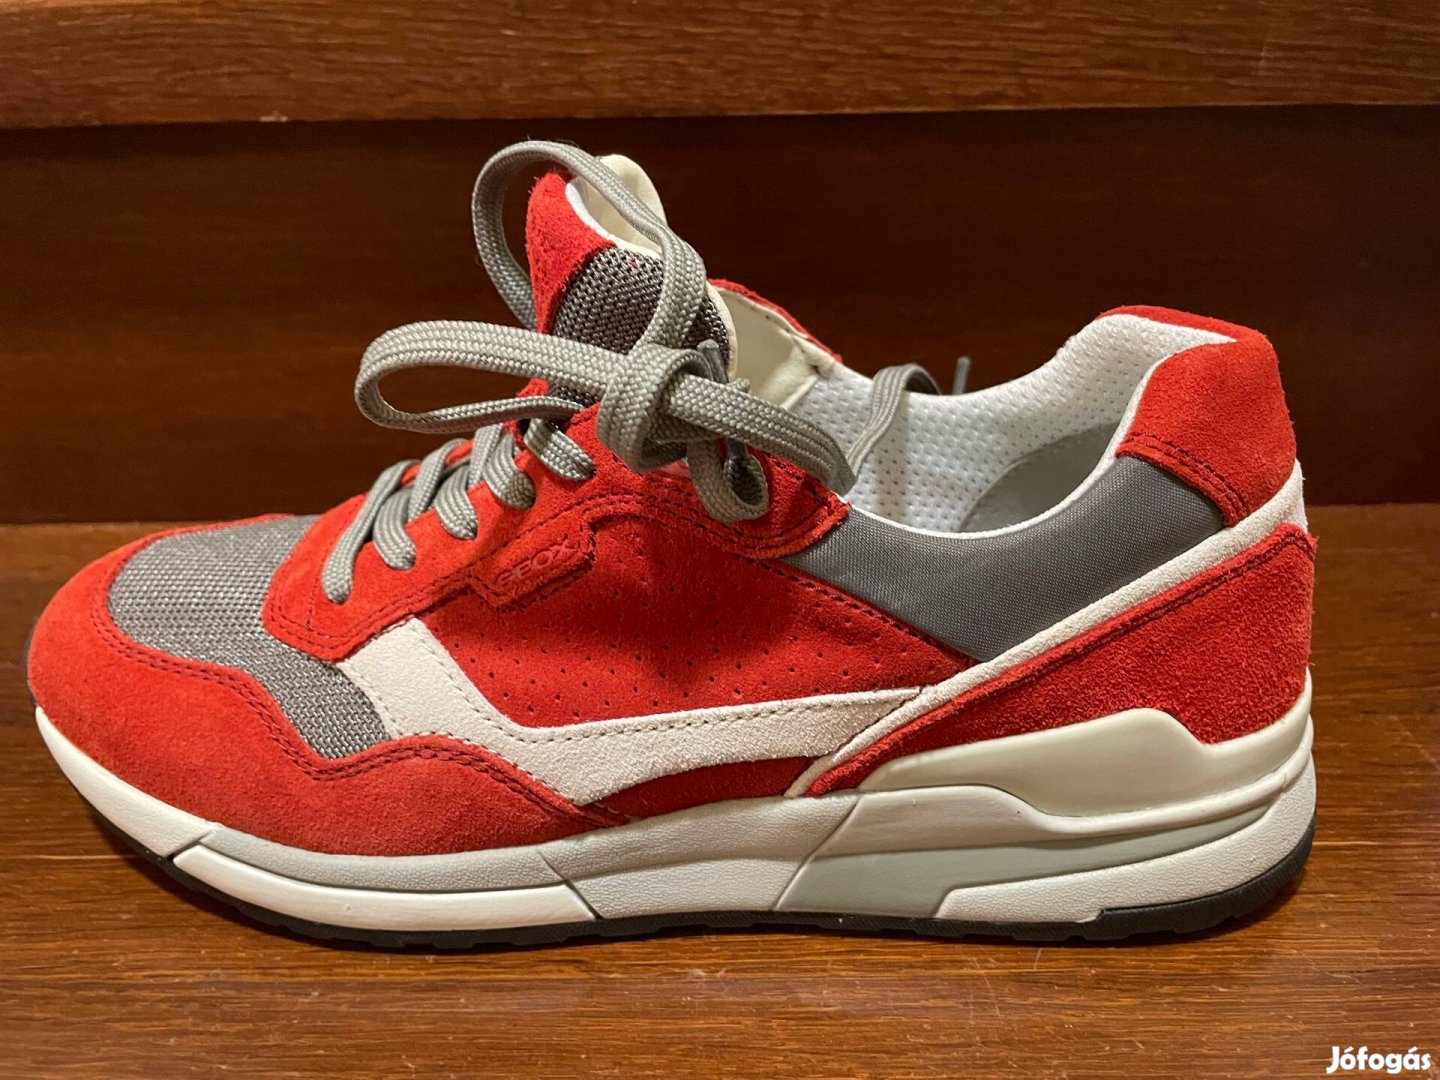 Új, 41 méretű, piros színű Geox cipő